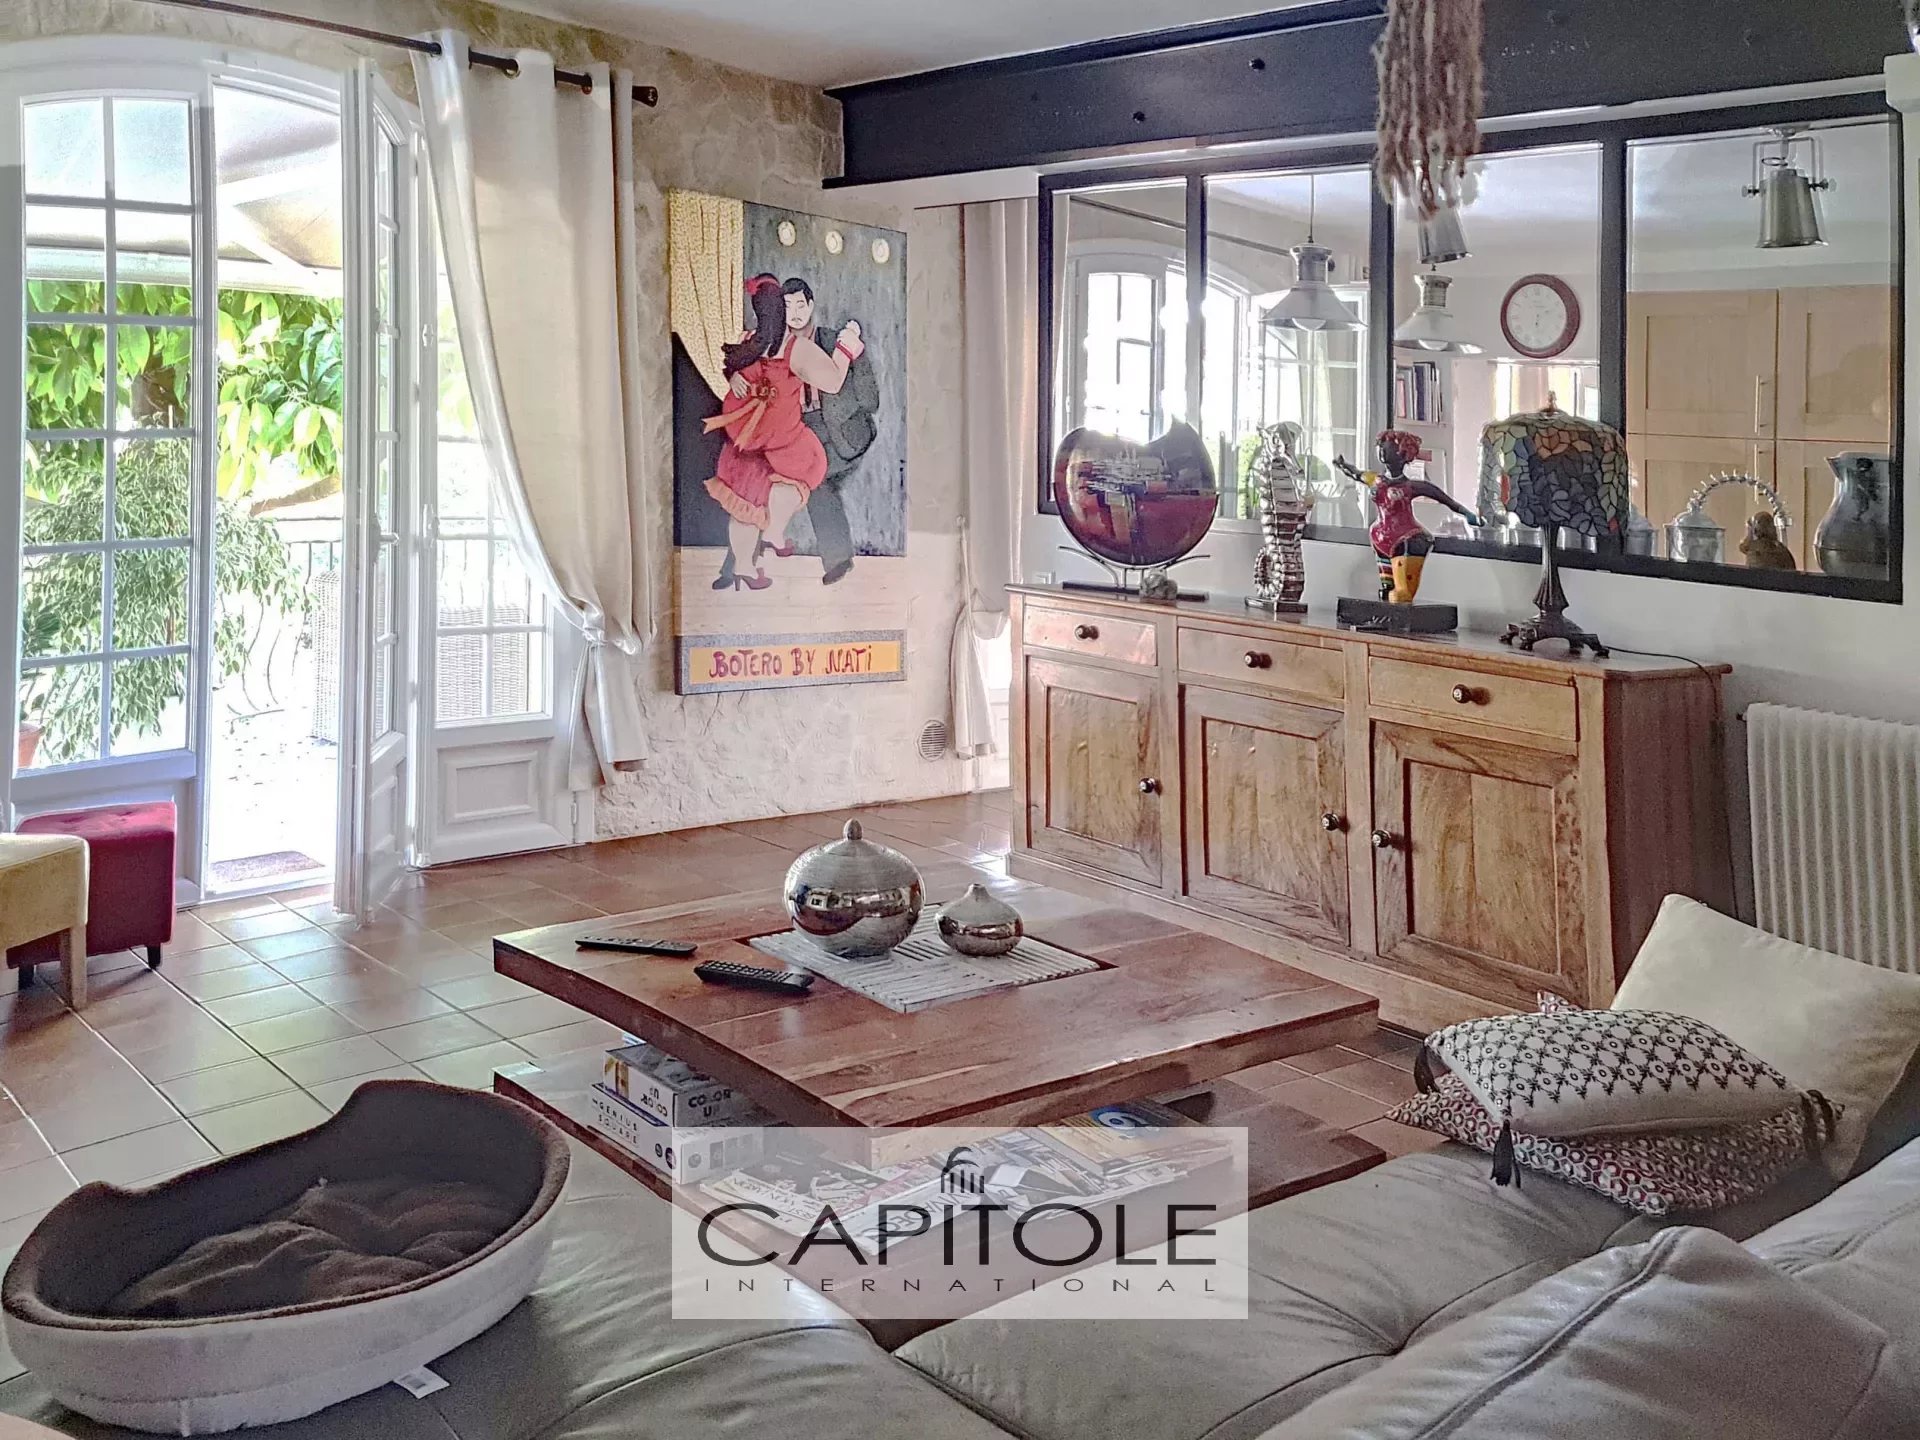 For sale, Antibes,  5 bedrooms villa  255 m², swimming pool,  landscaped garden, garage